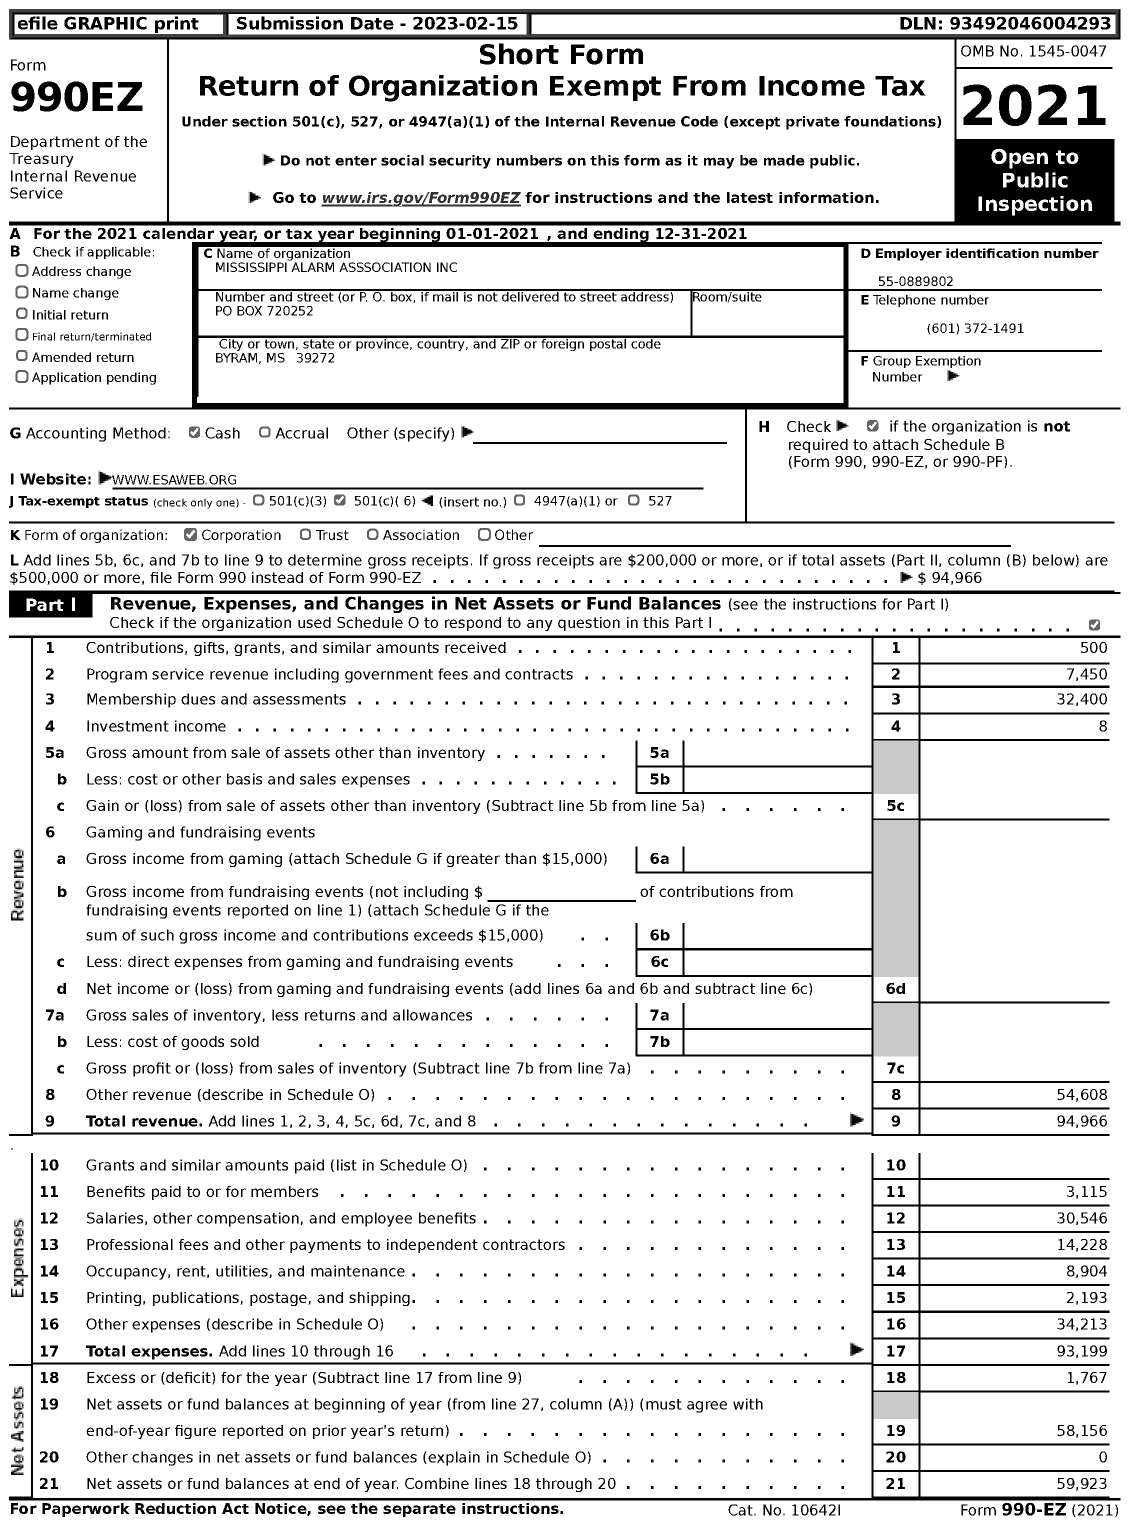 Image of first page of 2021 Form 990EZ for Mississippi Alarm Asssociation